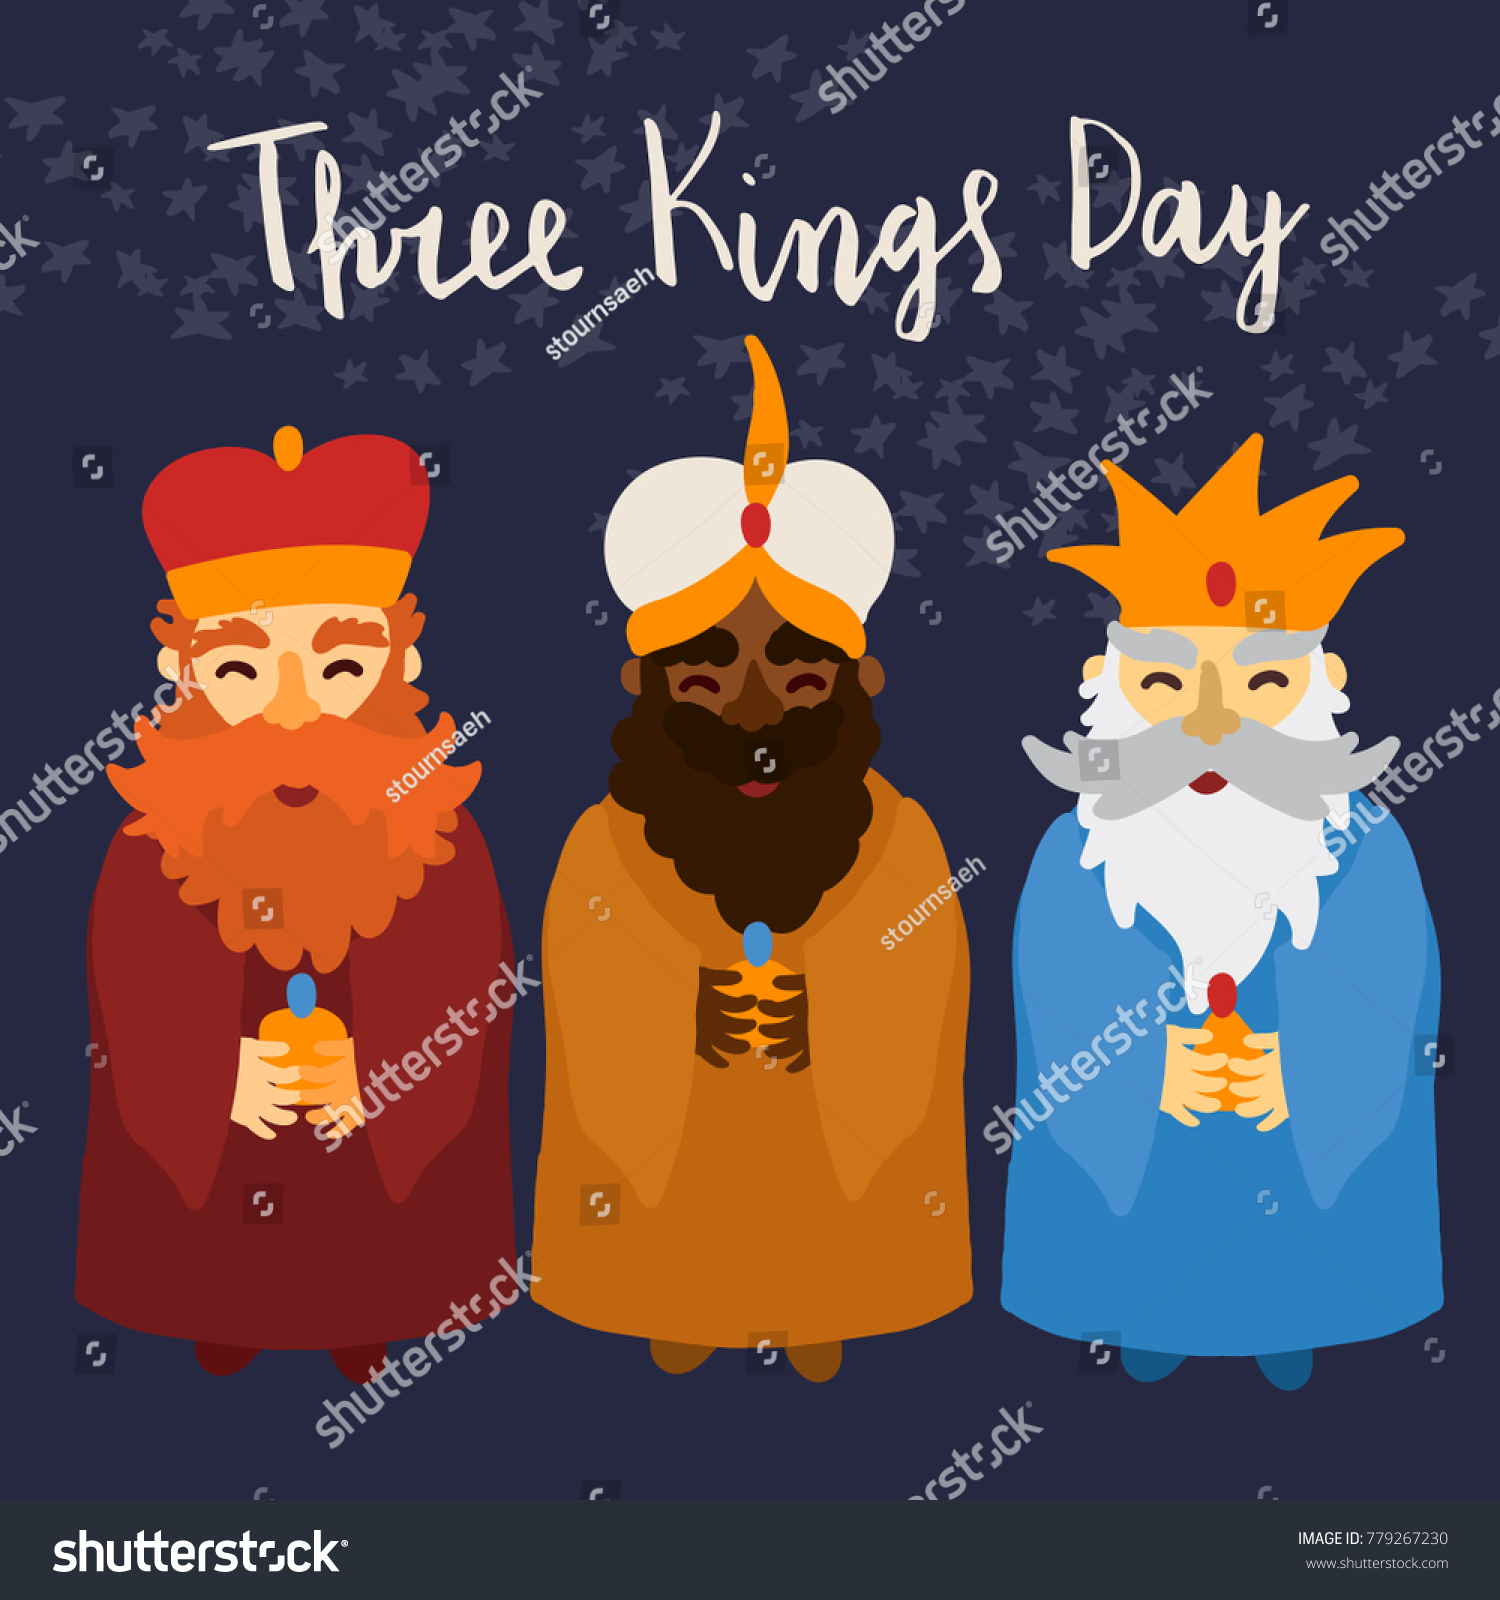 three-kings-day-epiphany-greeting-card-stock-vector-779267230